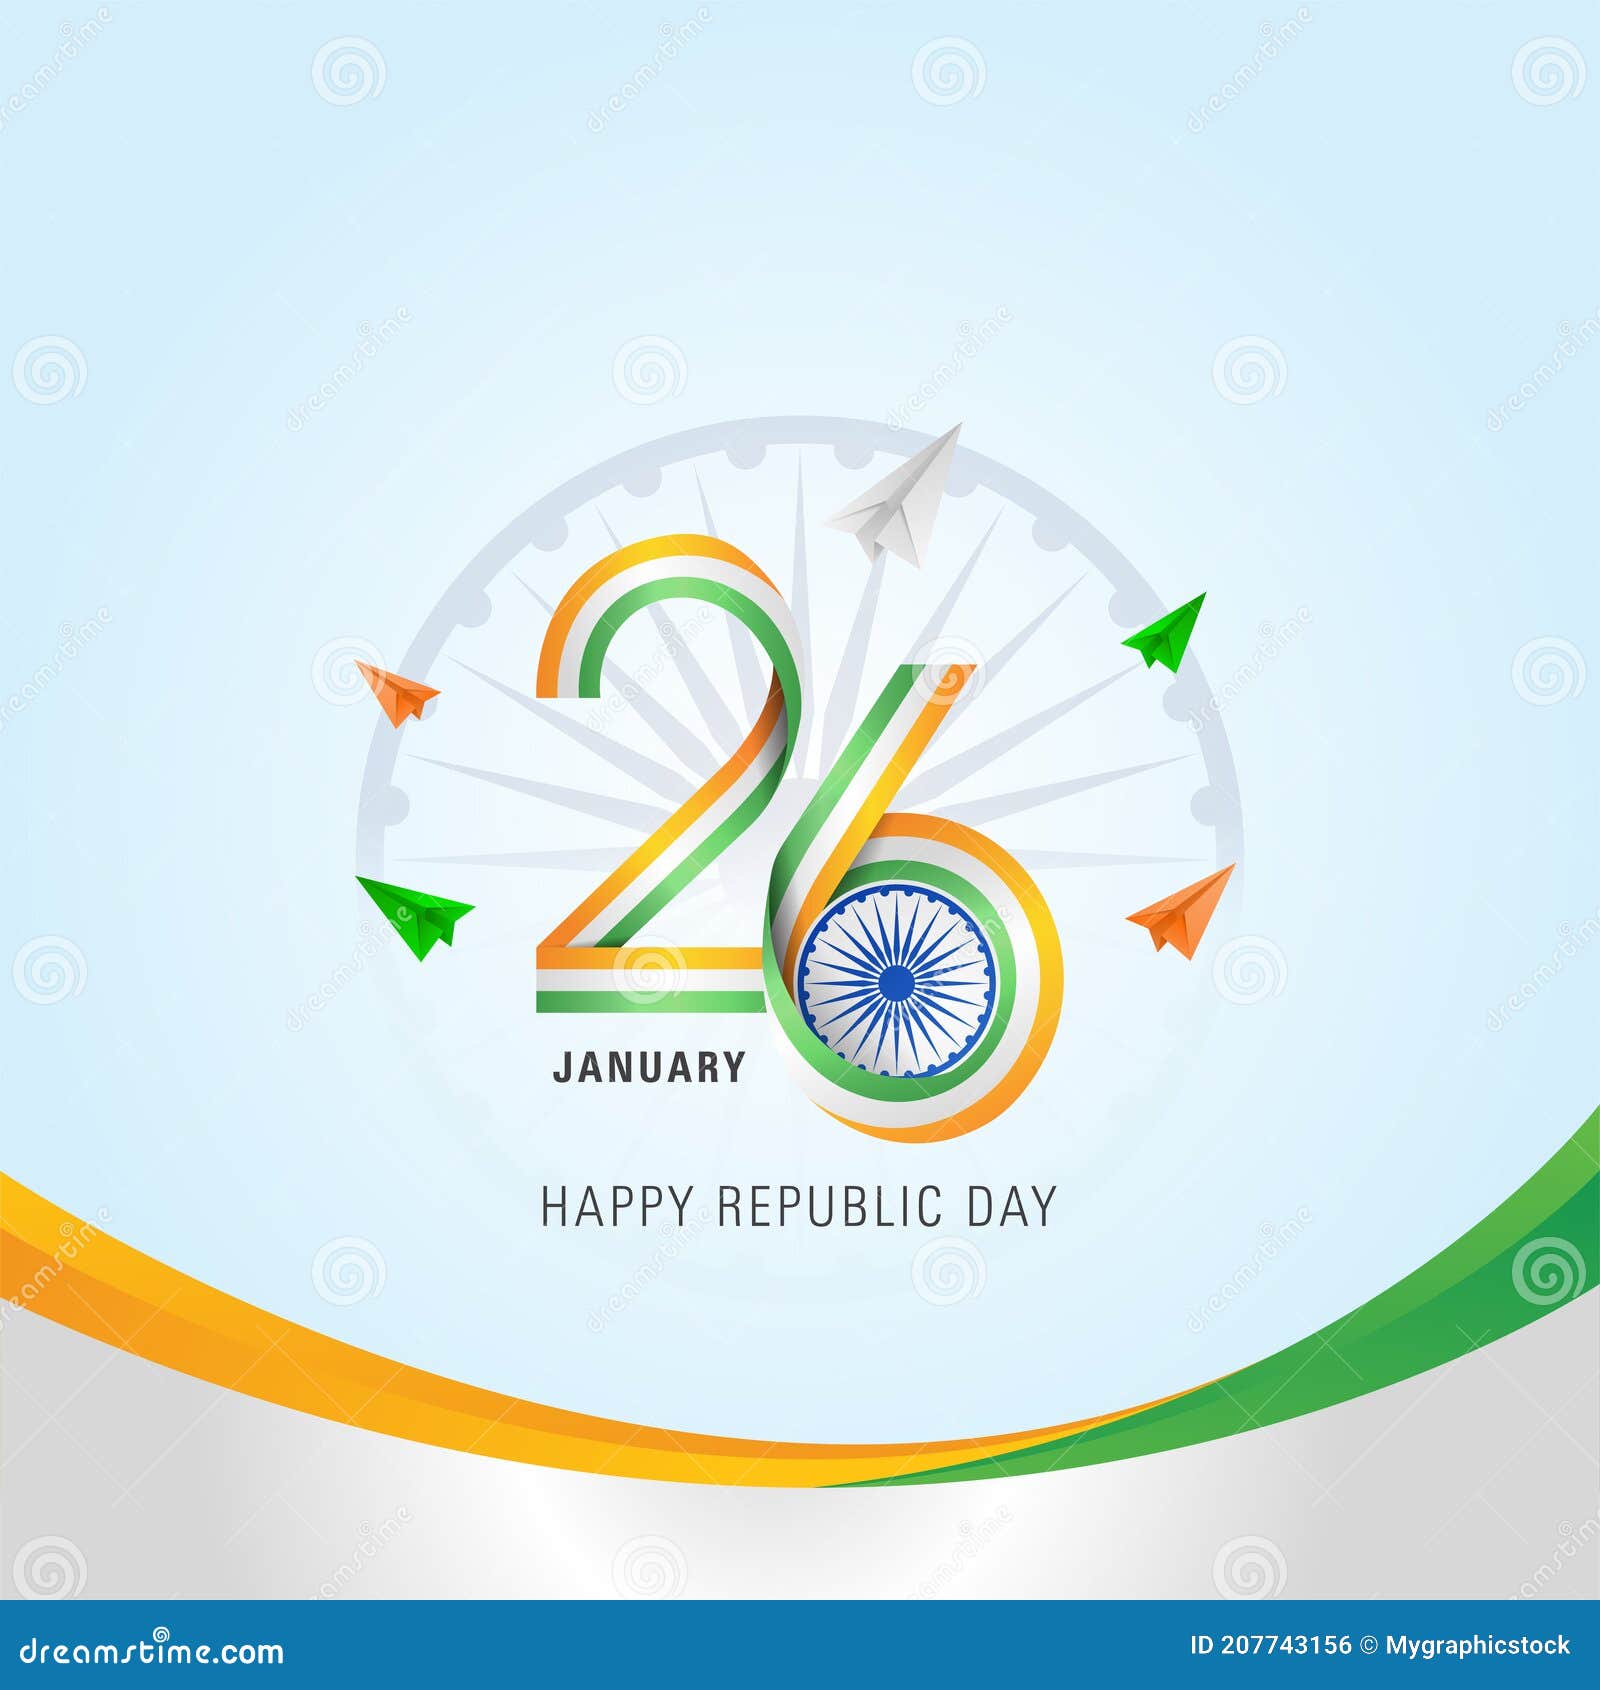 Indian Republic Day Banner Design Stock Vector Illustration Of